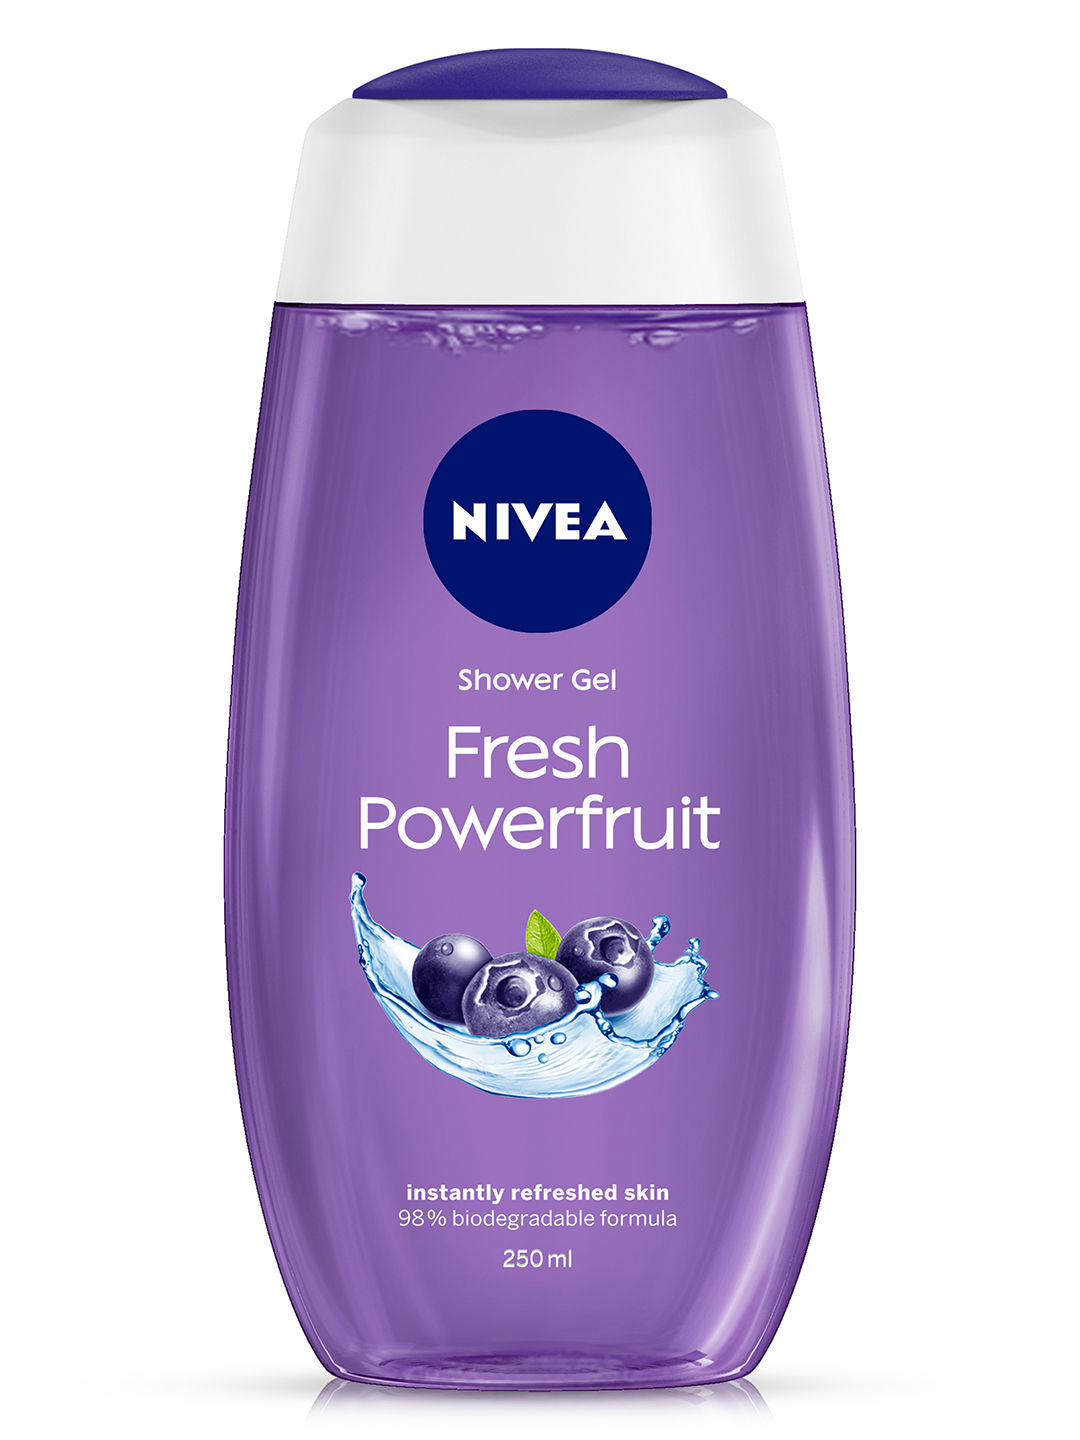 Buy NIVEA Shower Gel Power Fruit Fresh Body Wash 250ml - Purplle